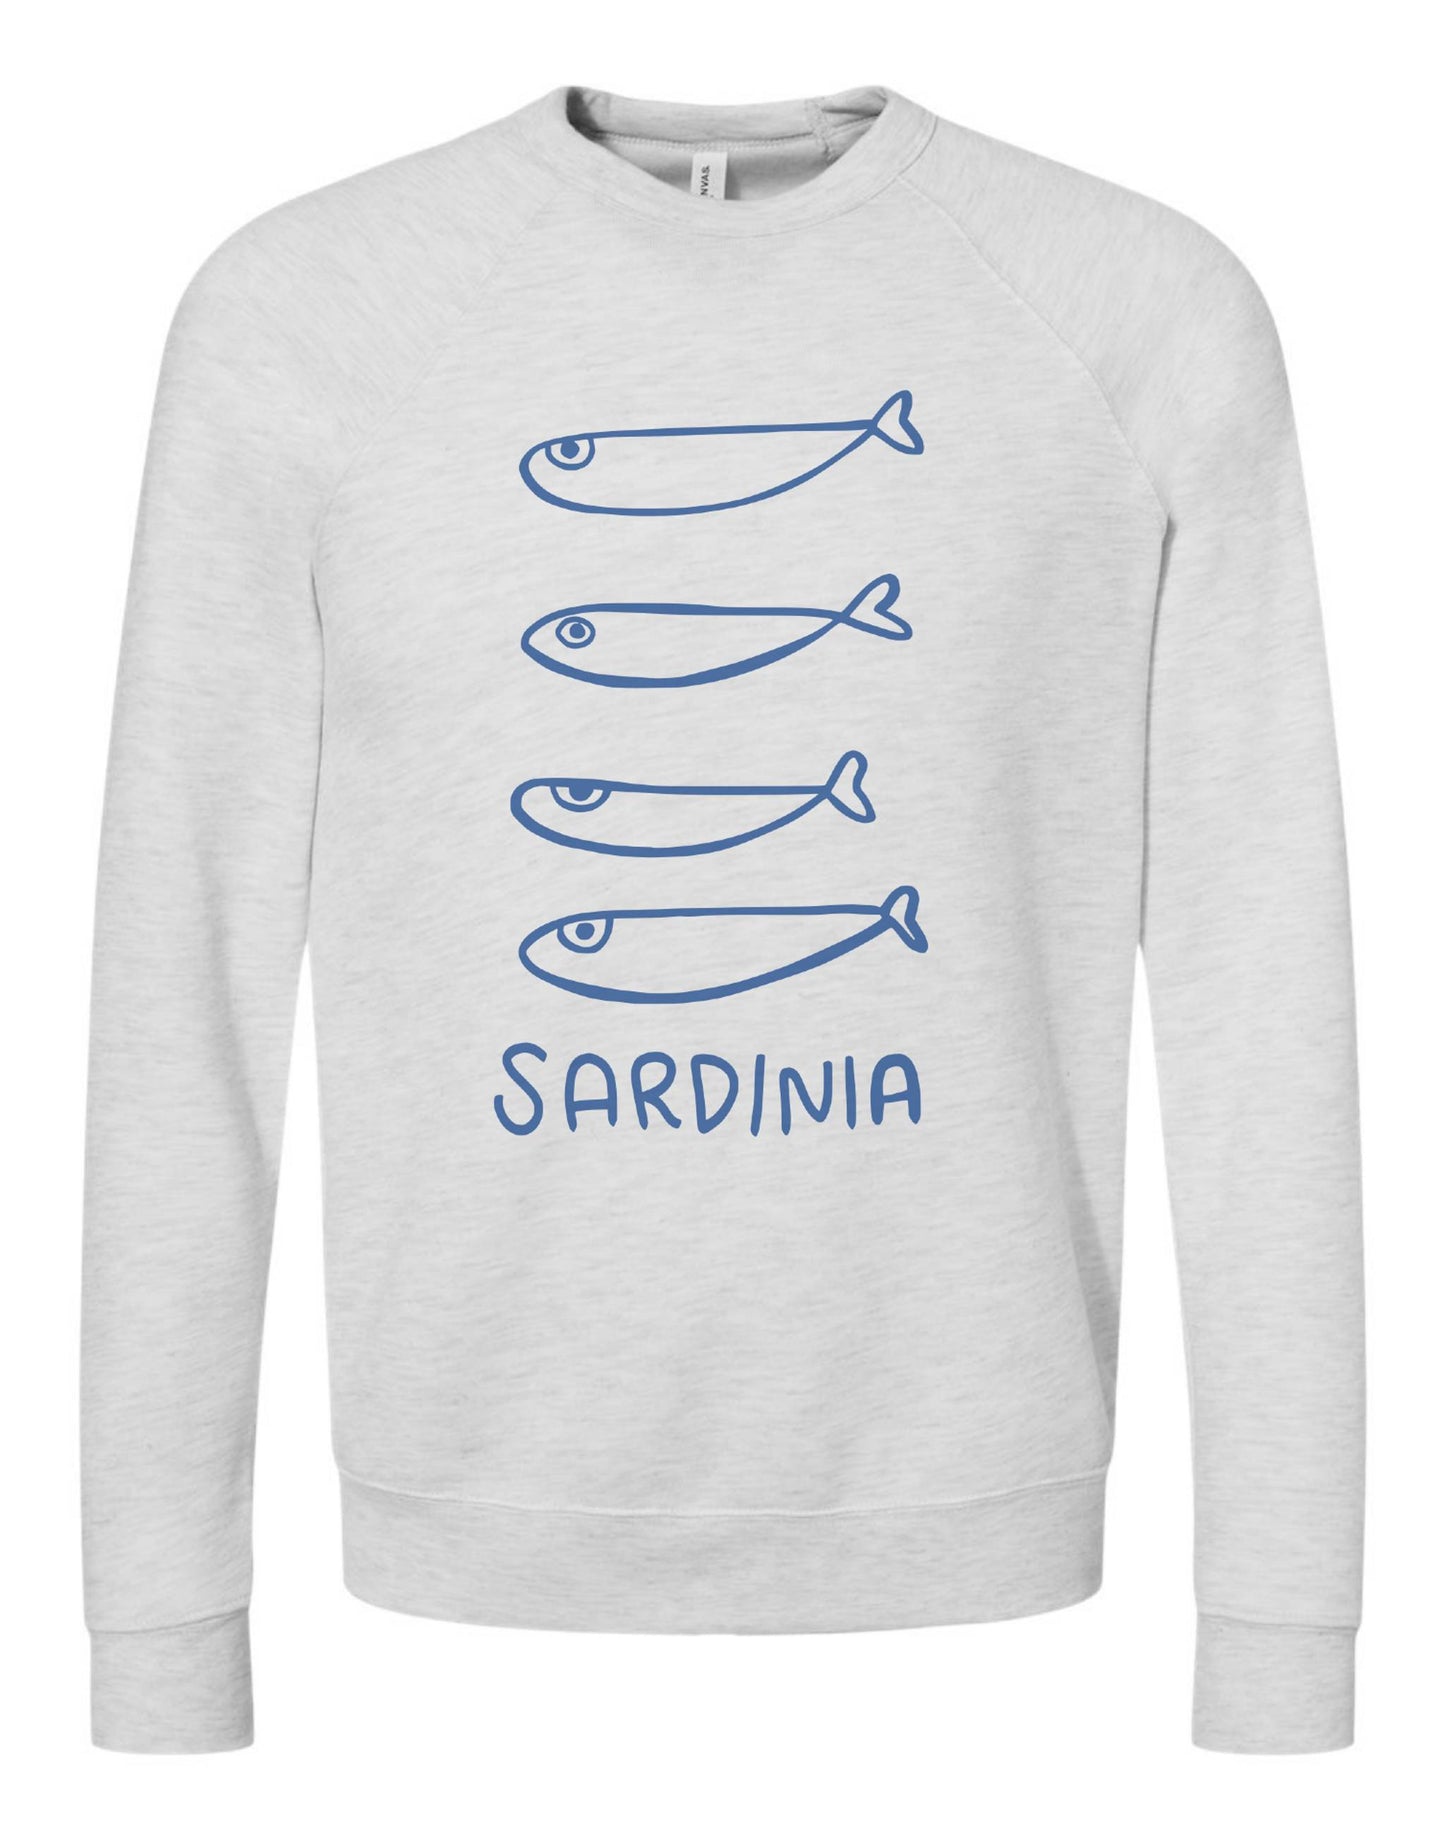 Sardines Sweater